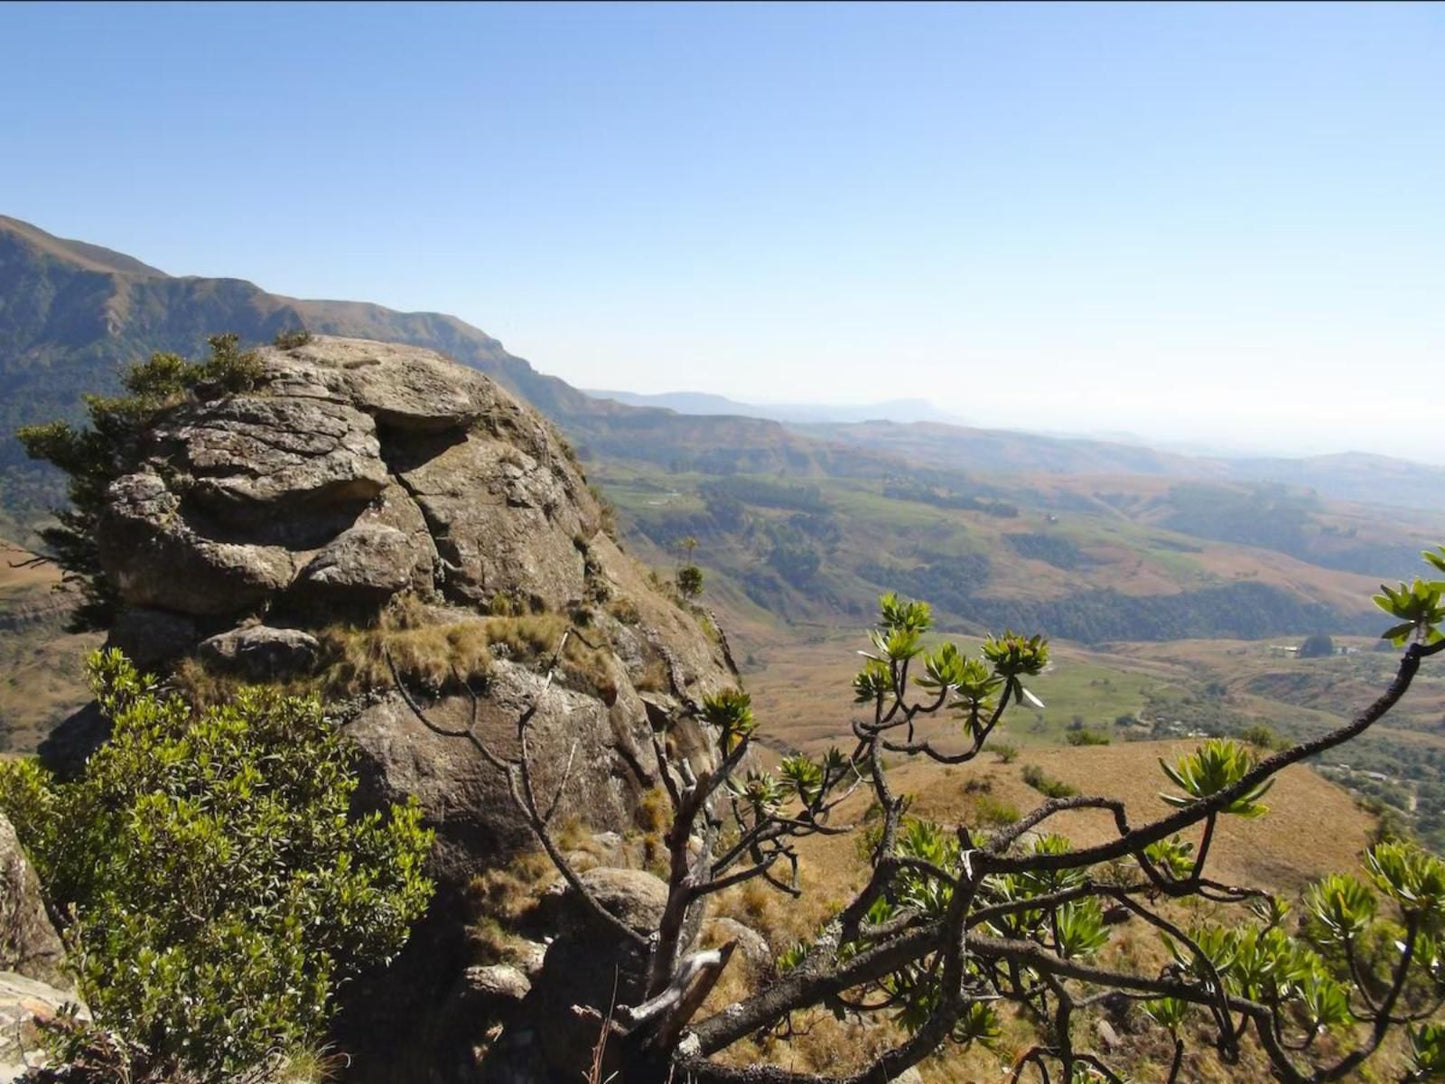 Ikhayalamafu Mountain Reserve Champagne Valley Kwazulu Natal South Africa Complementary Colors, Nature